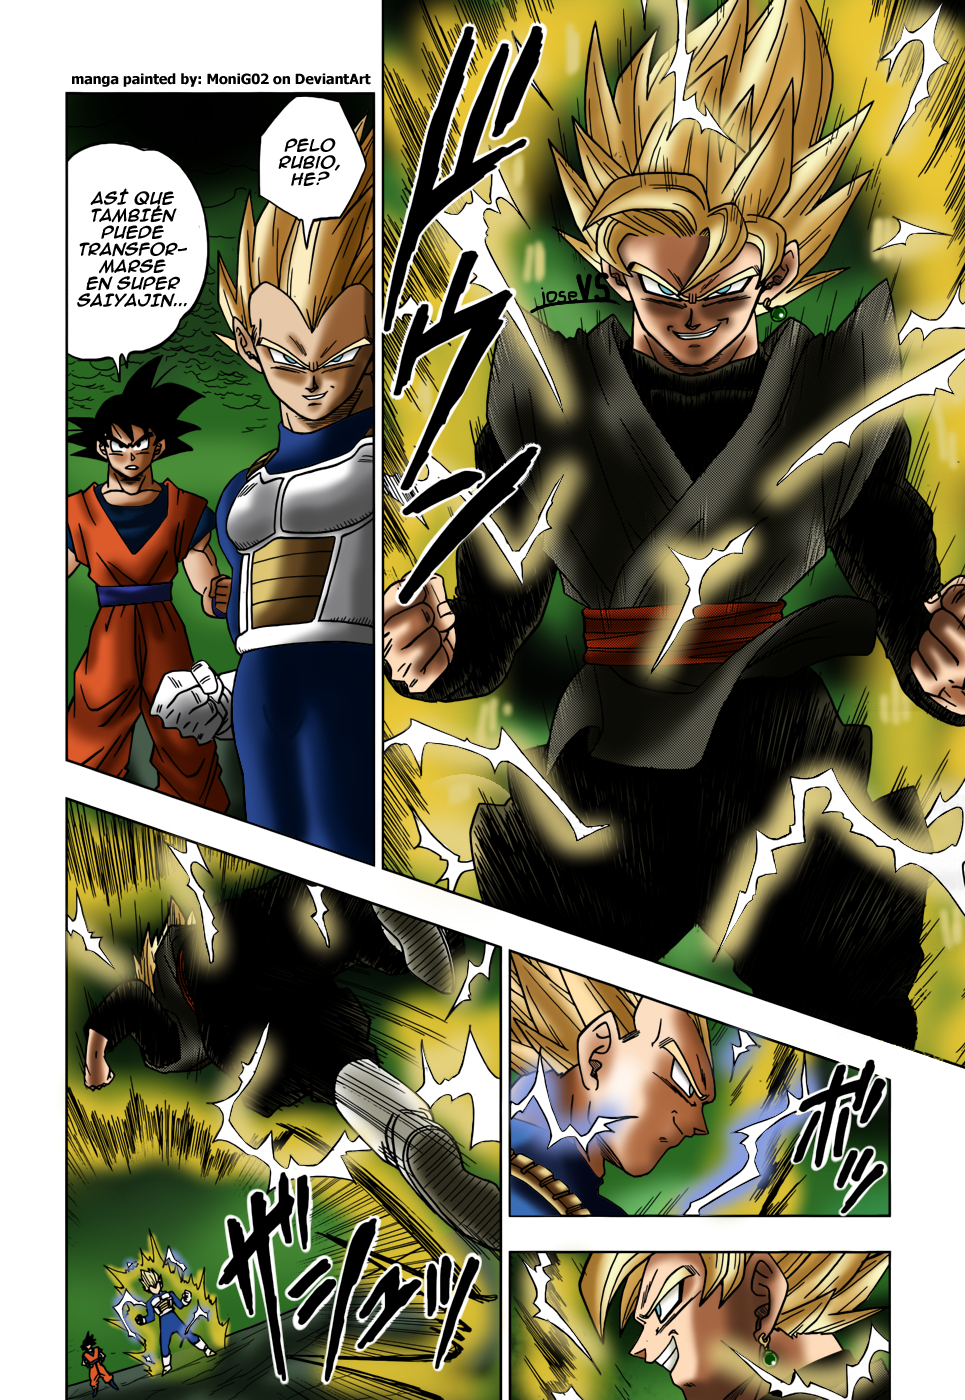 Black Goku SSJ2 DBS manga 19 by MoniG02 by MoniG02 on DeviantArt